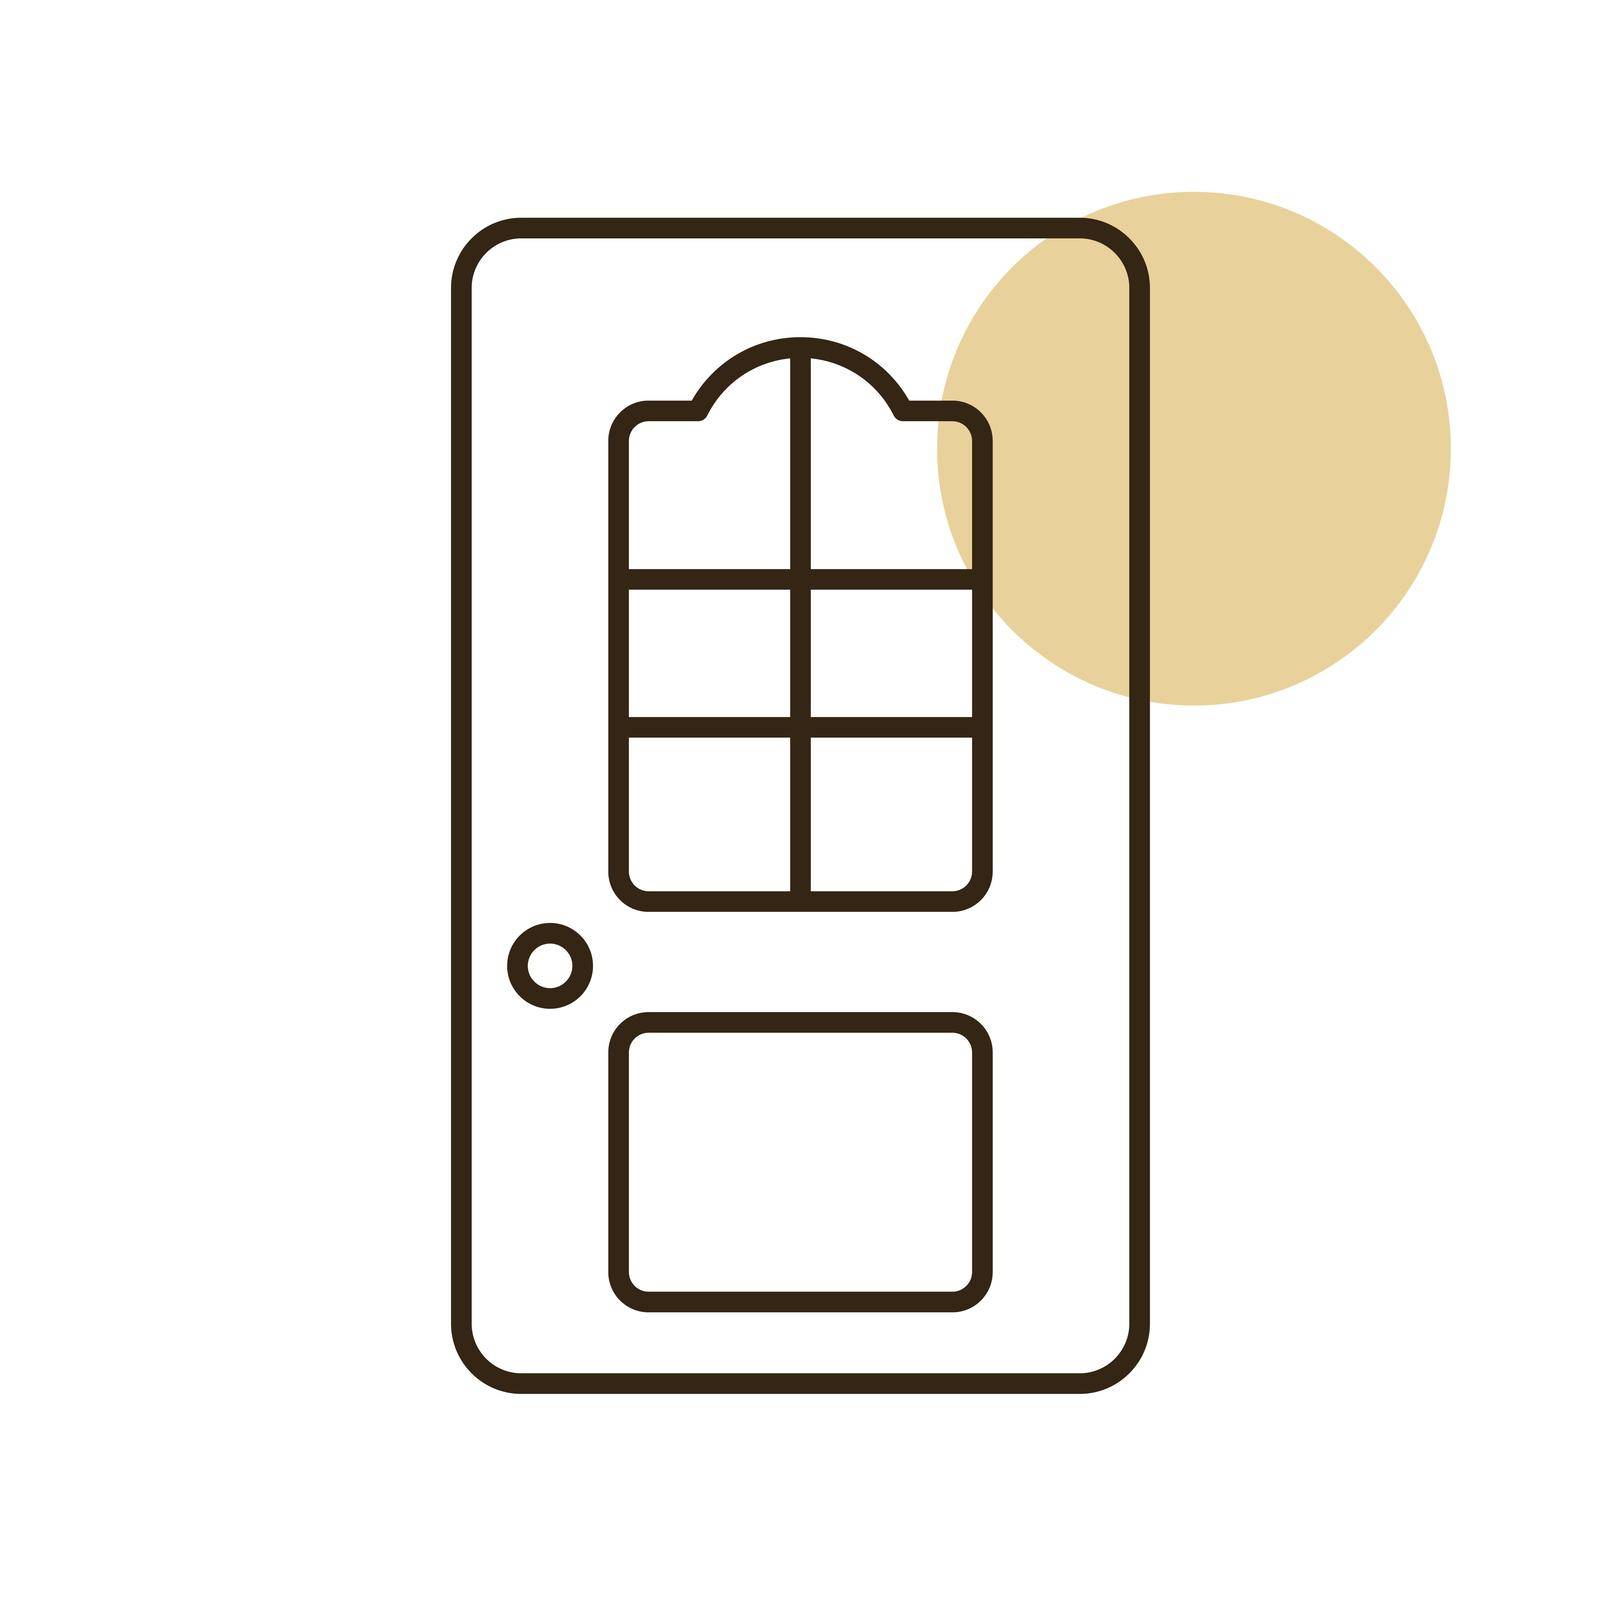 Interroom door vector flat icon. Construction, repair and building. Graph symbol for your web site design, logo, app, UI